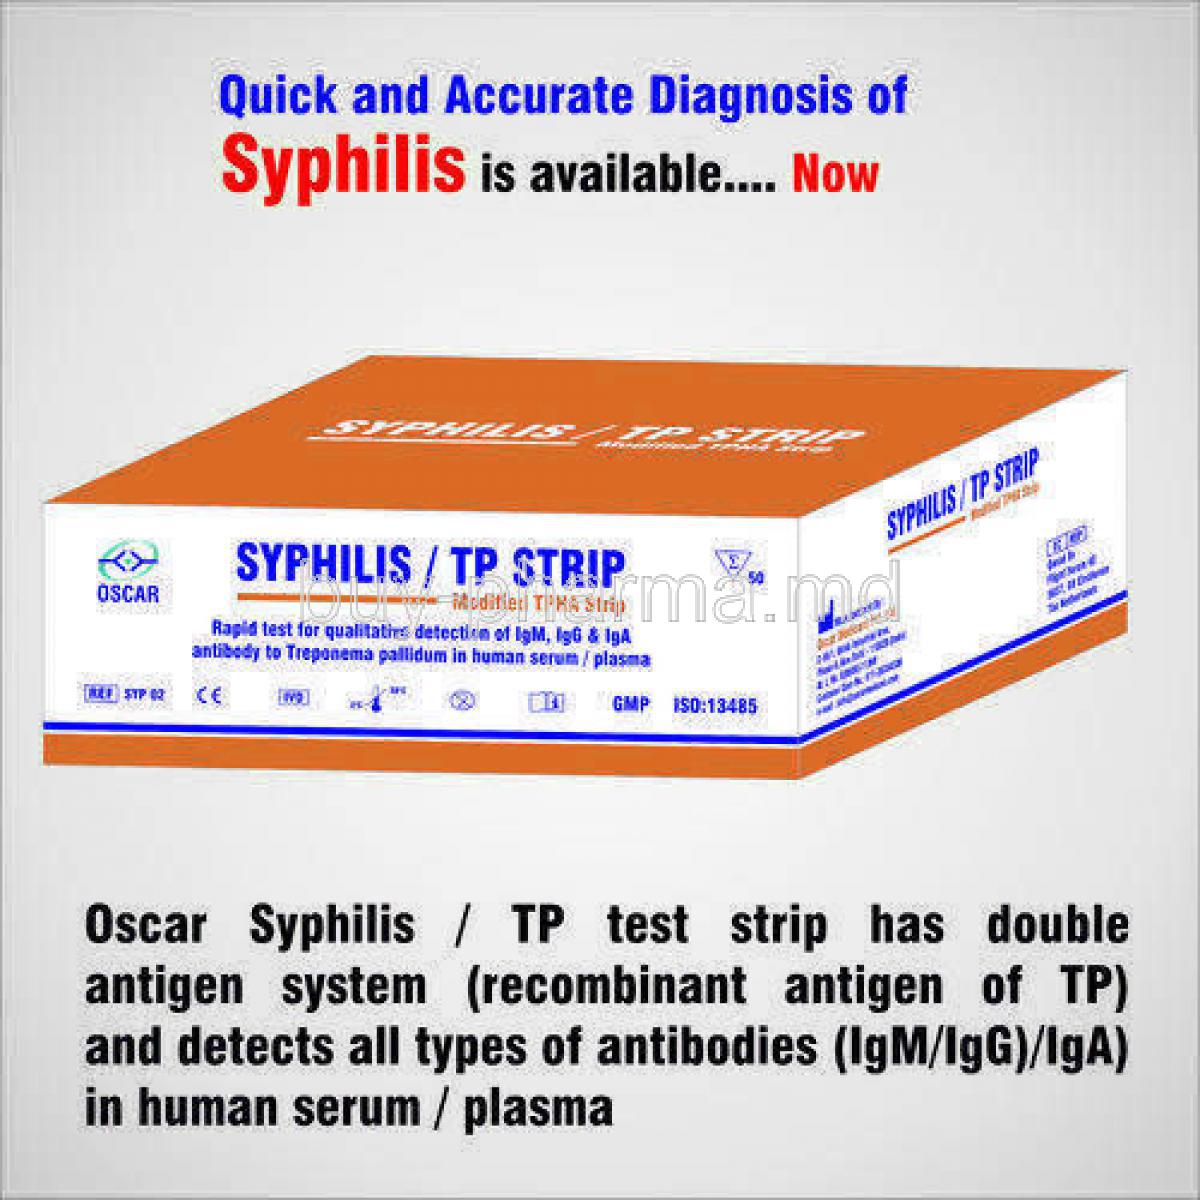 Syphilis Test Kit, Oscar, box presentation with information